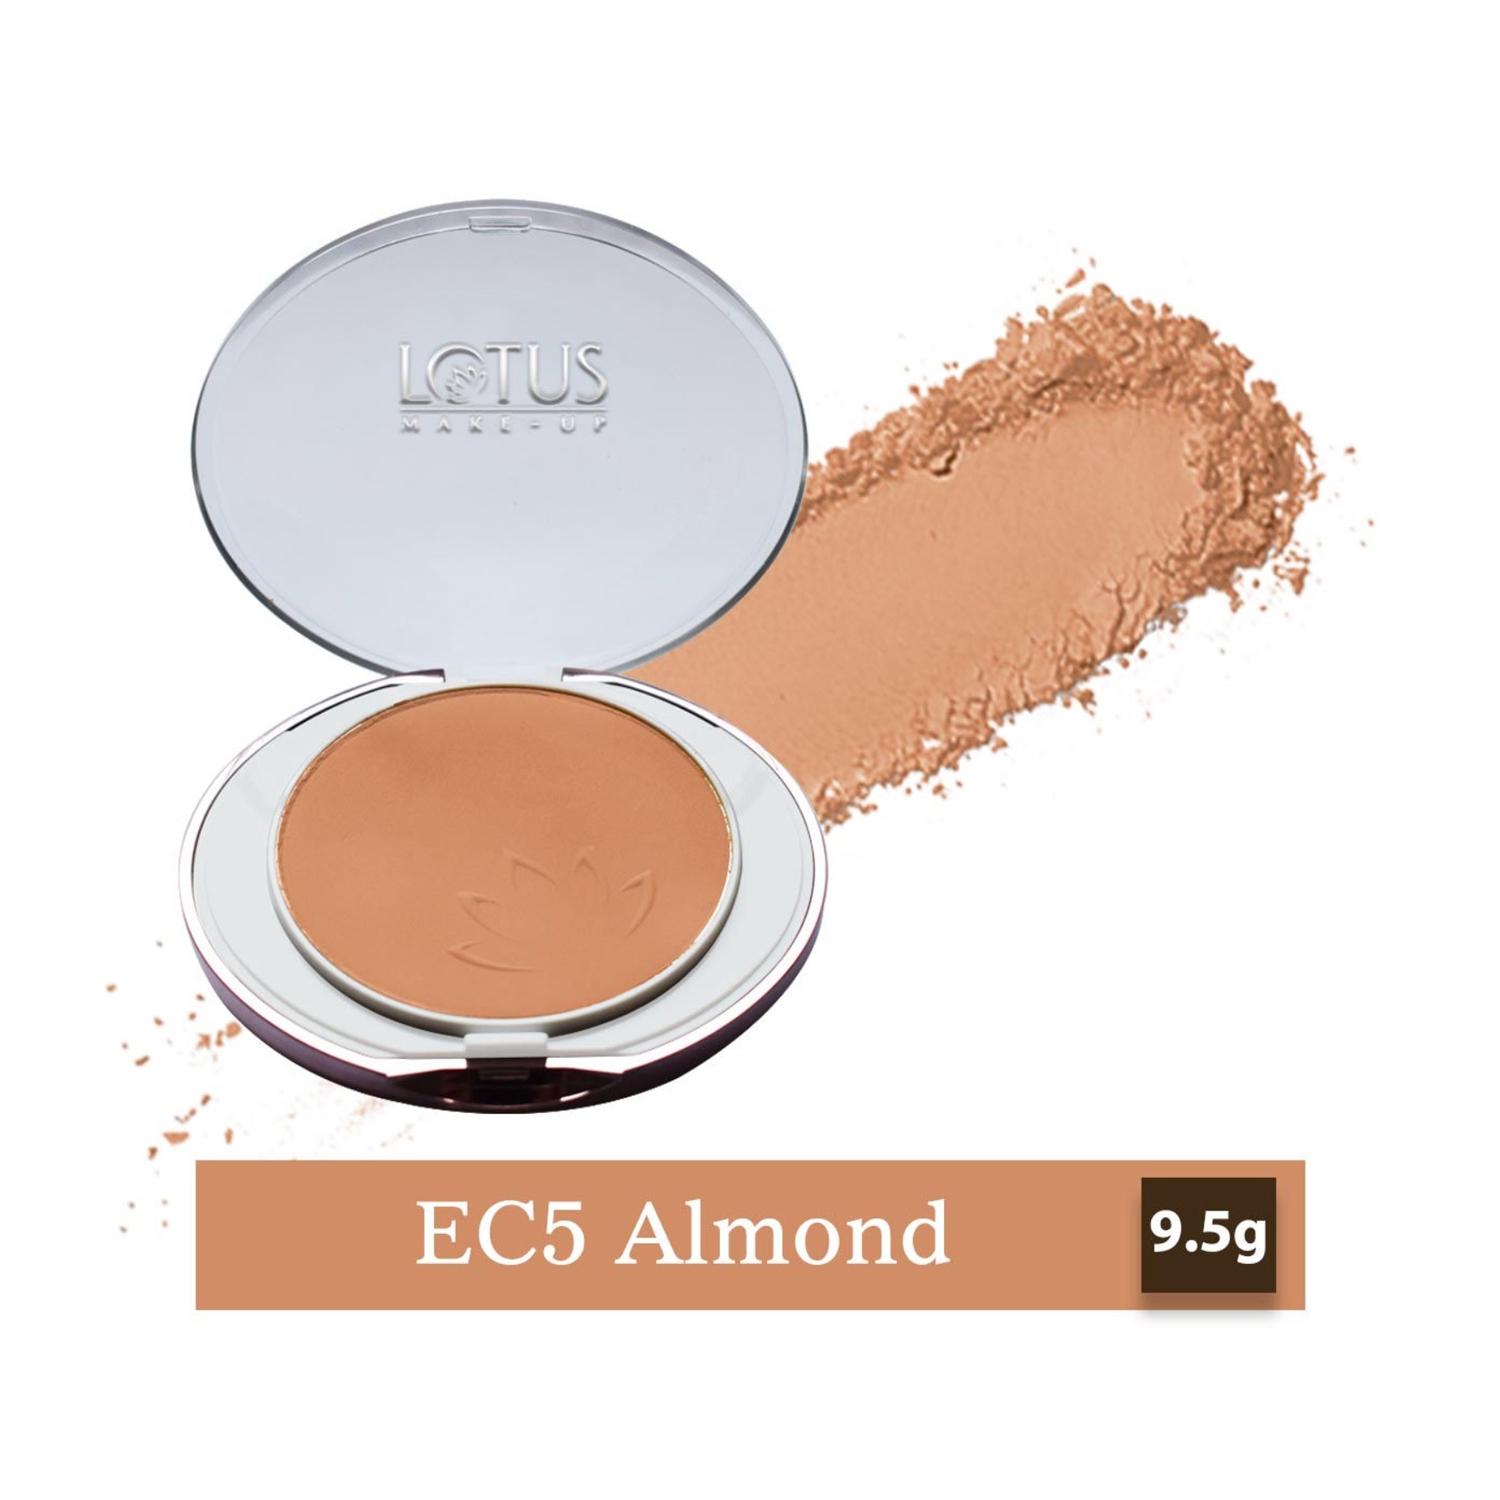 lotus makeup ecostay ideal finish pressed powder spf 25 - ec5 almond (9.5g)